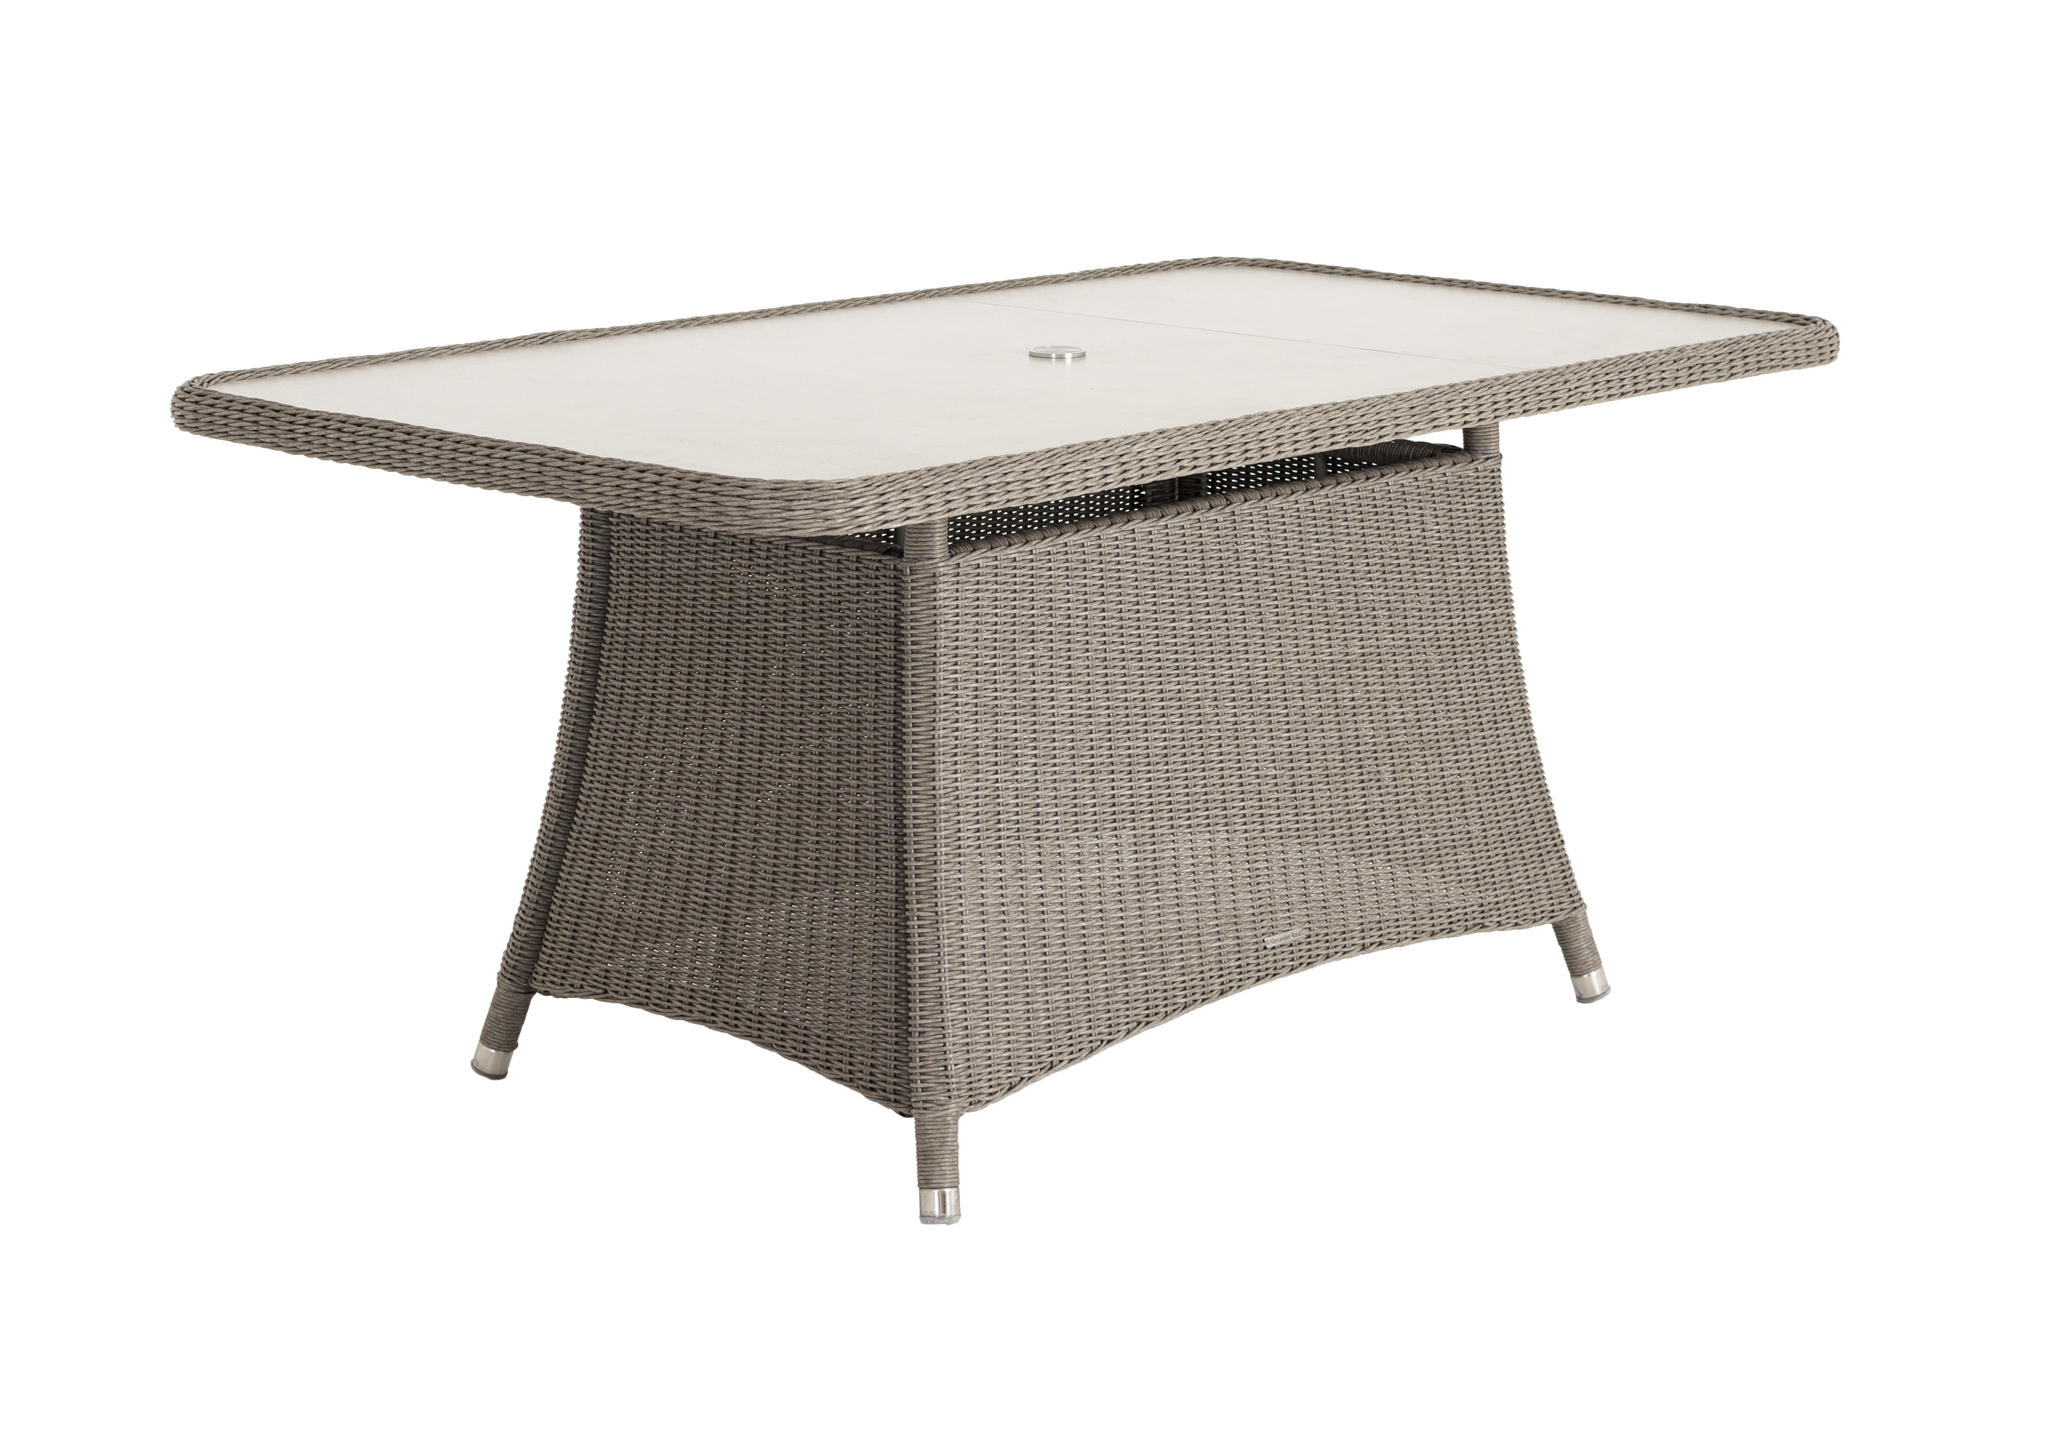 Hazelmere Rectangular Table 1.65m x 0.95m